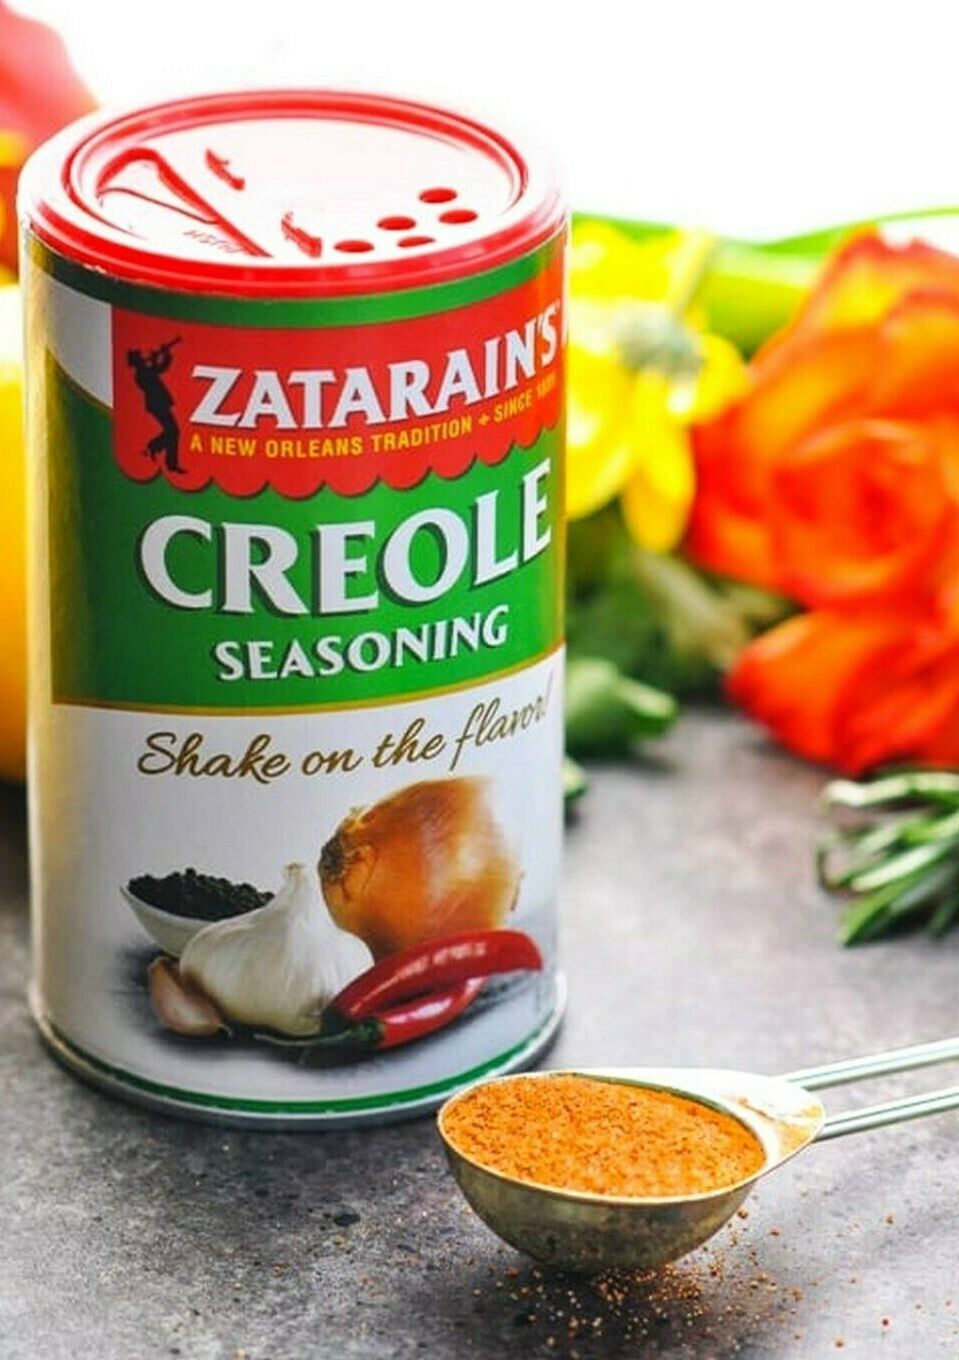 Zatarain's New Orleans sTyLe CREOLE SEASONING cajun powder 8 oz ZATARAINS 12101 - $19.43